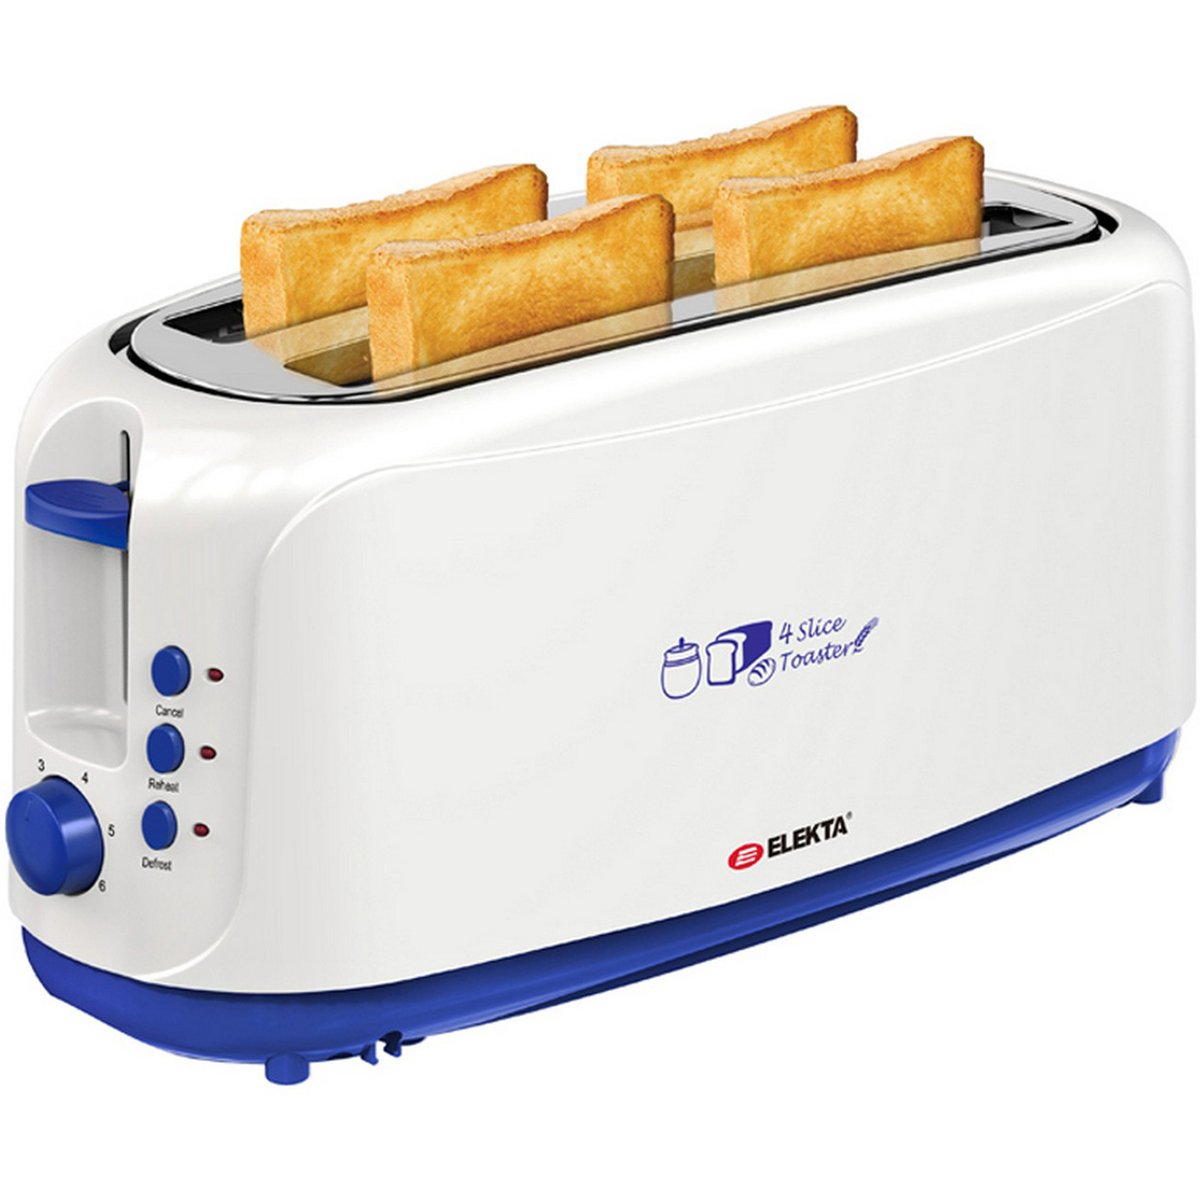 Elekta Toaster with 3 function ET452 4 Slice